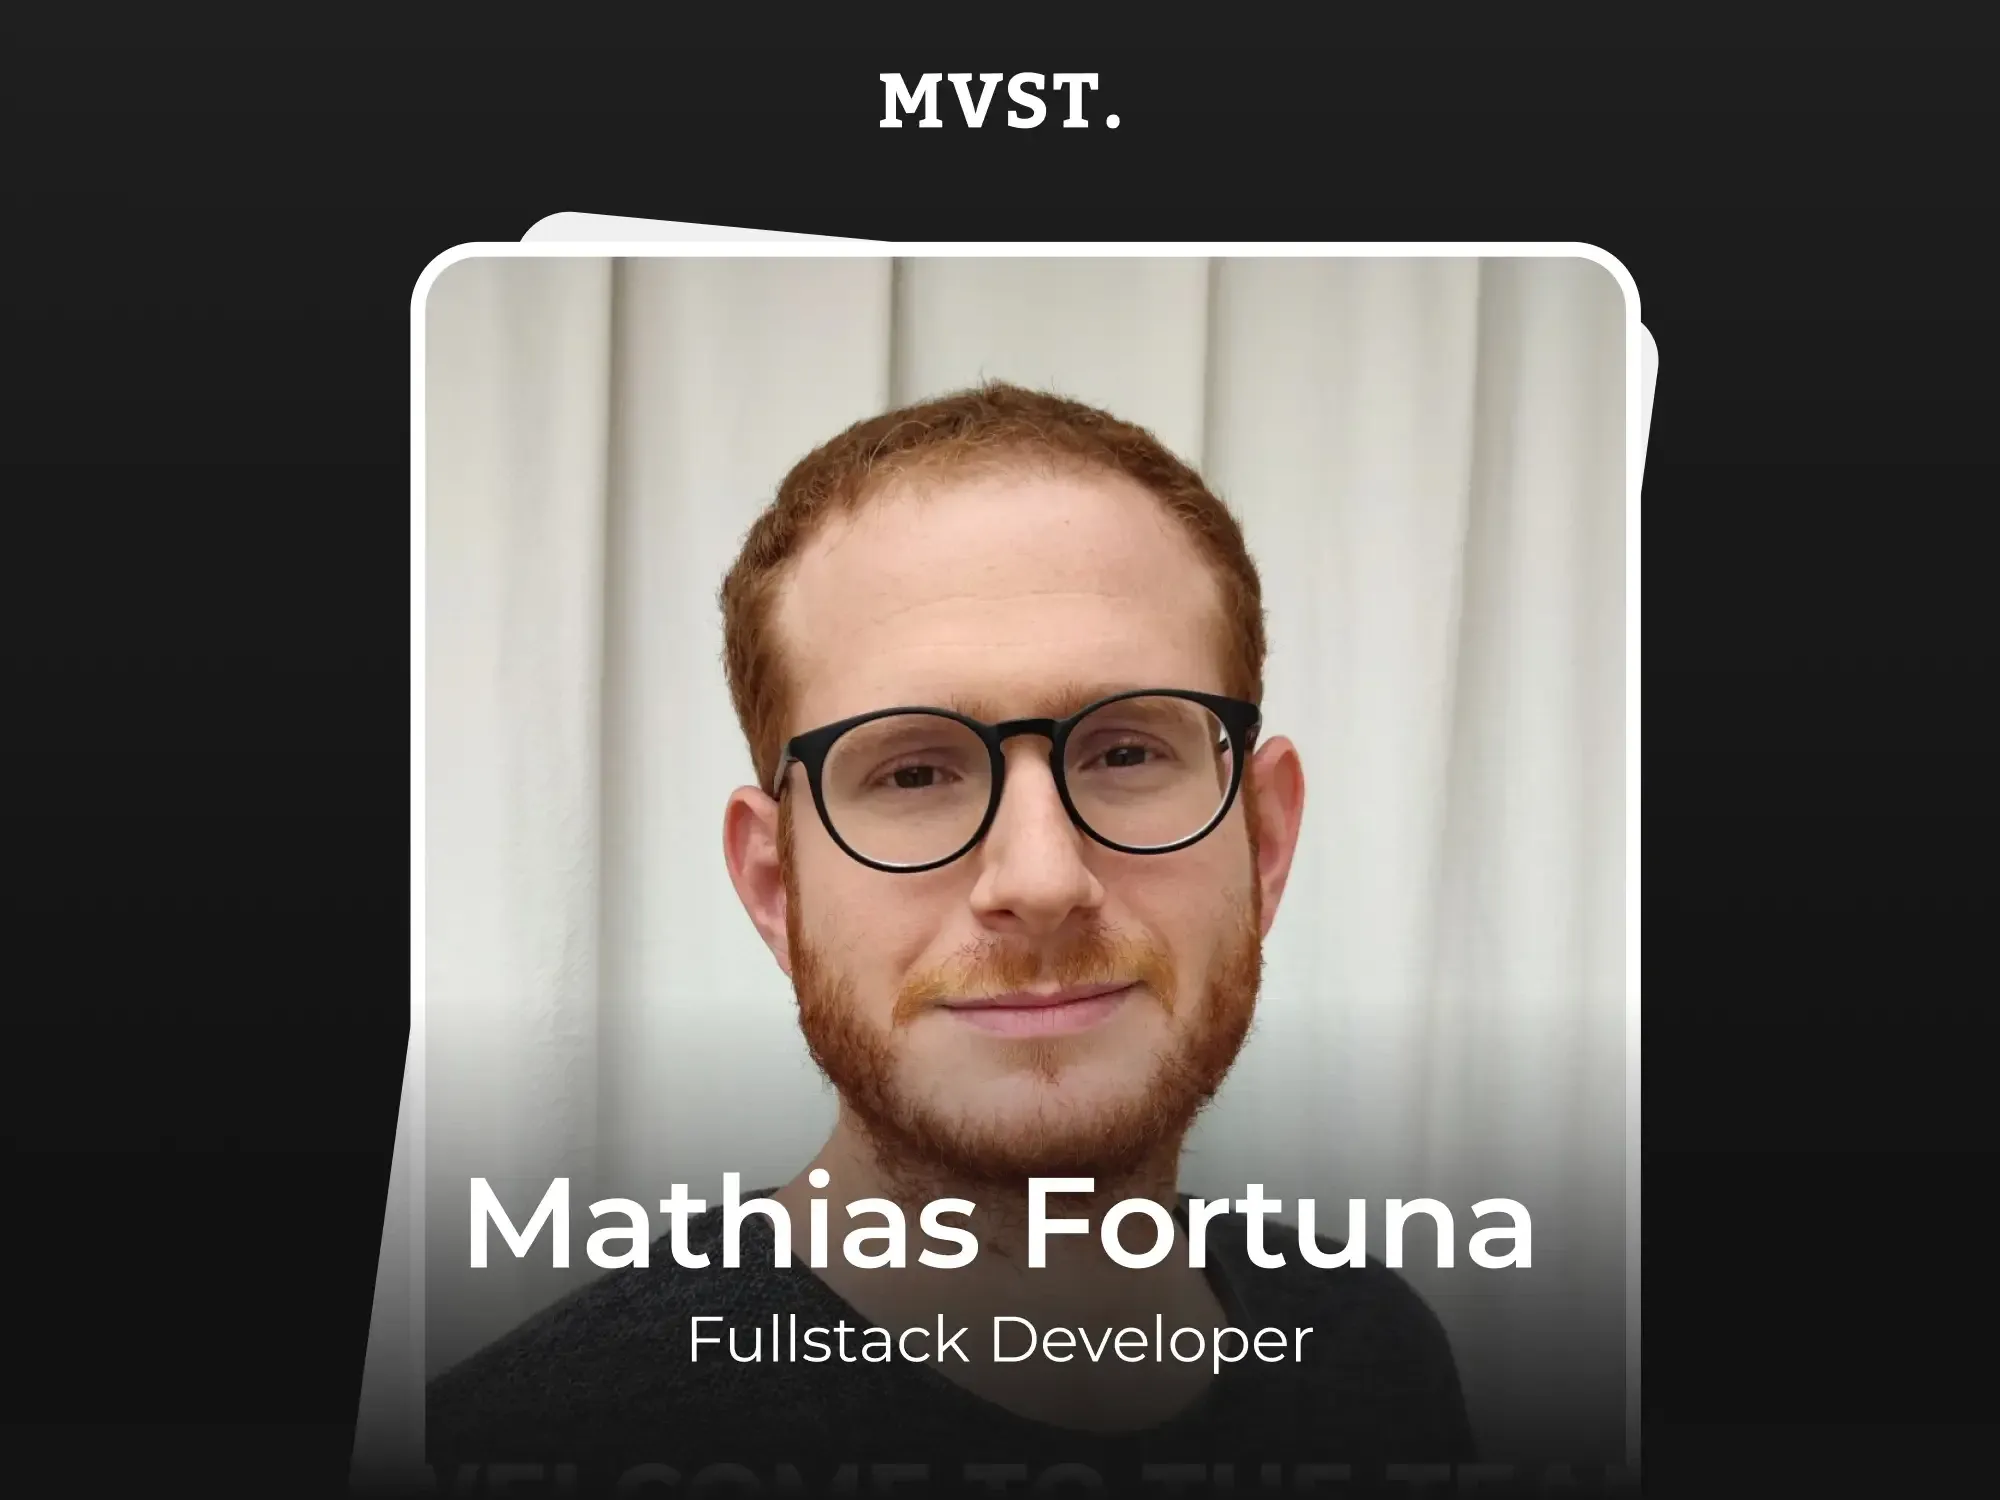 Welcome to MVST, Mathias!